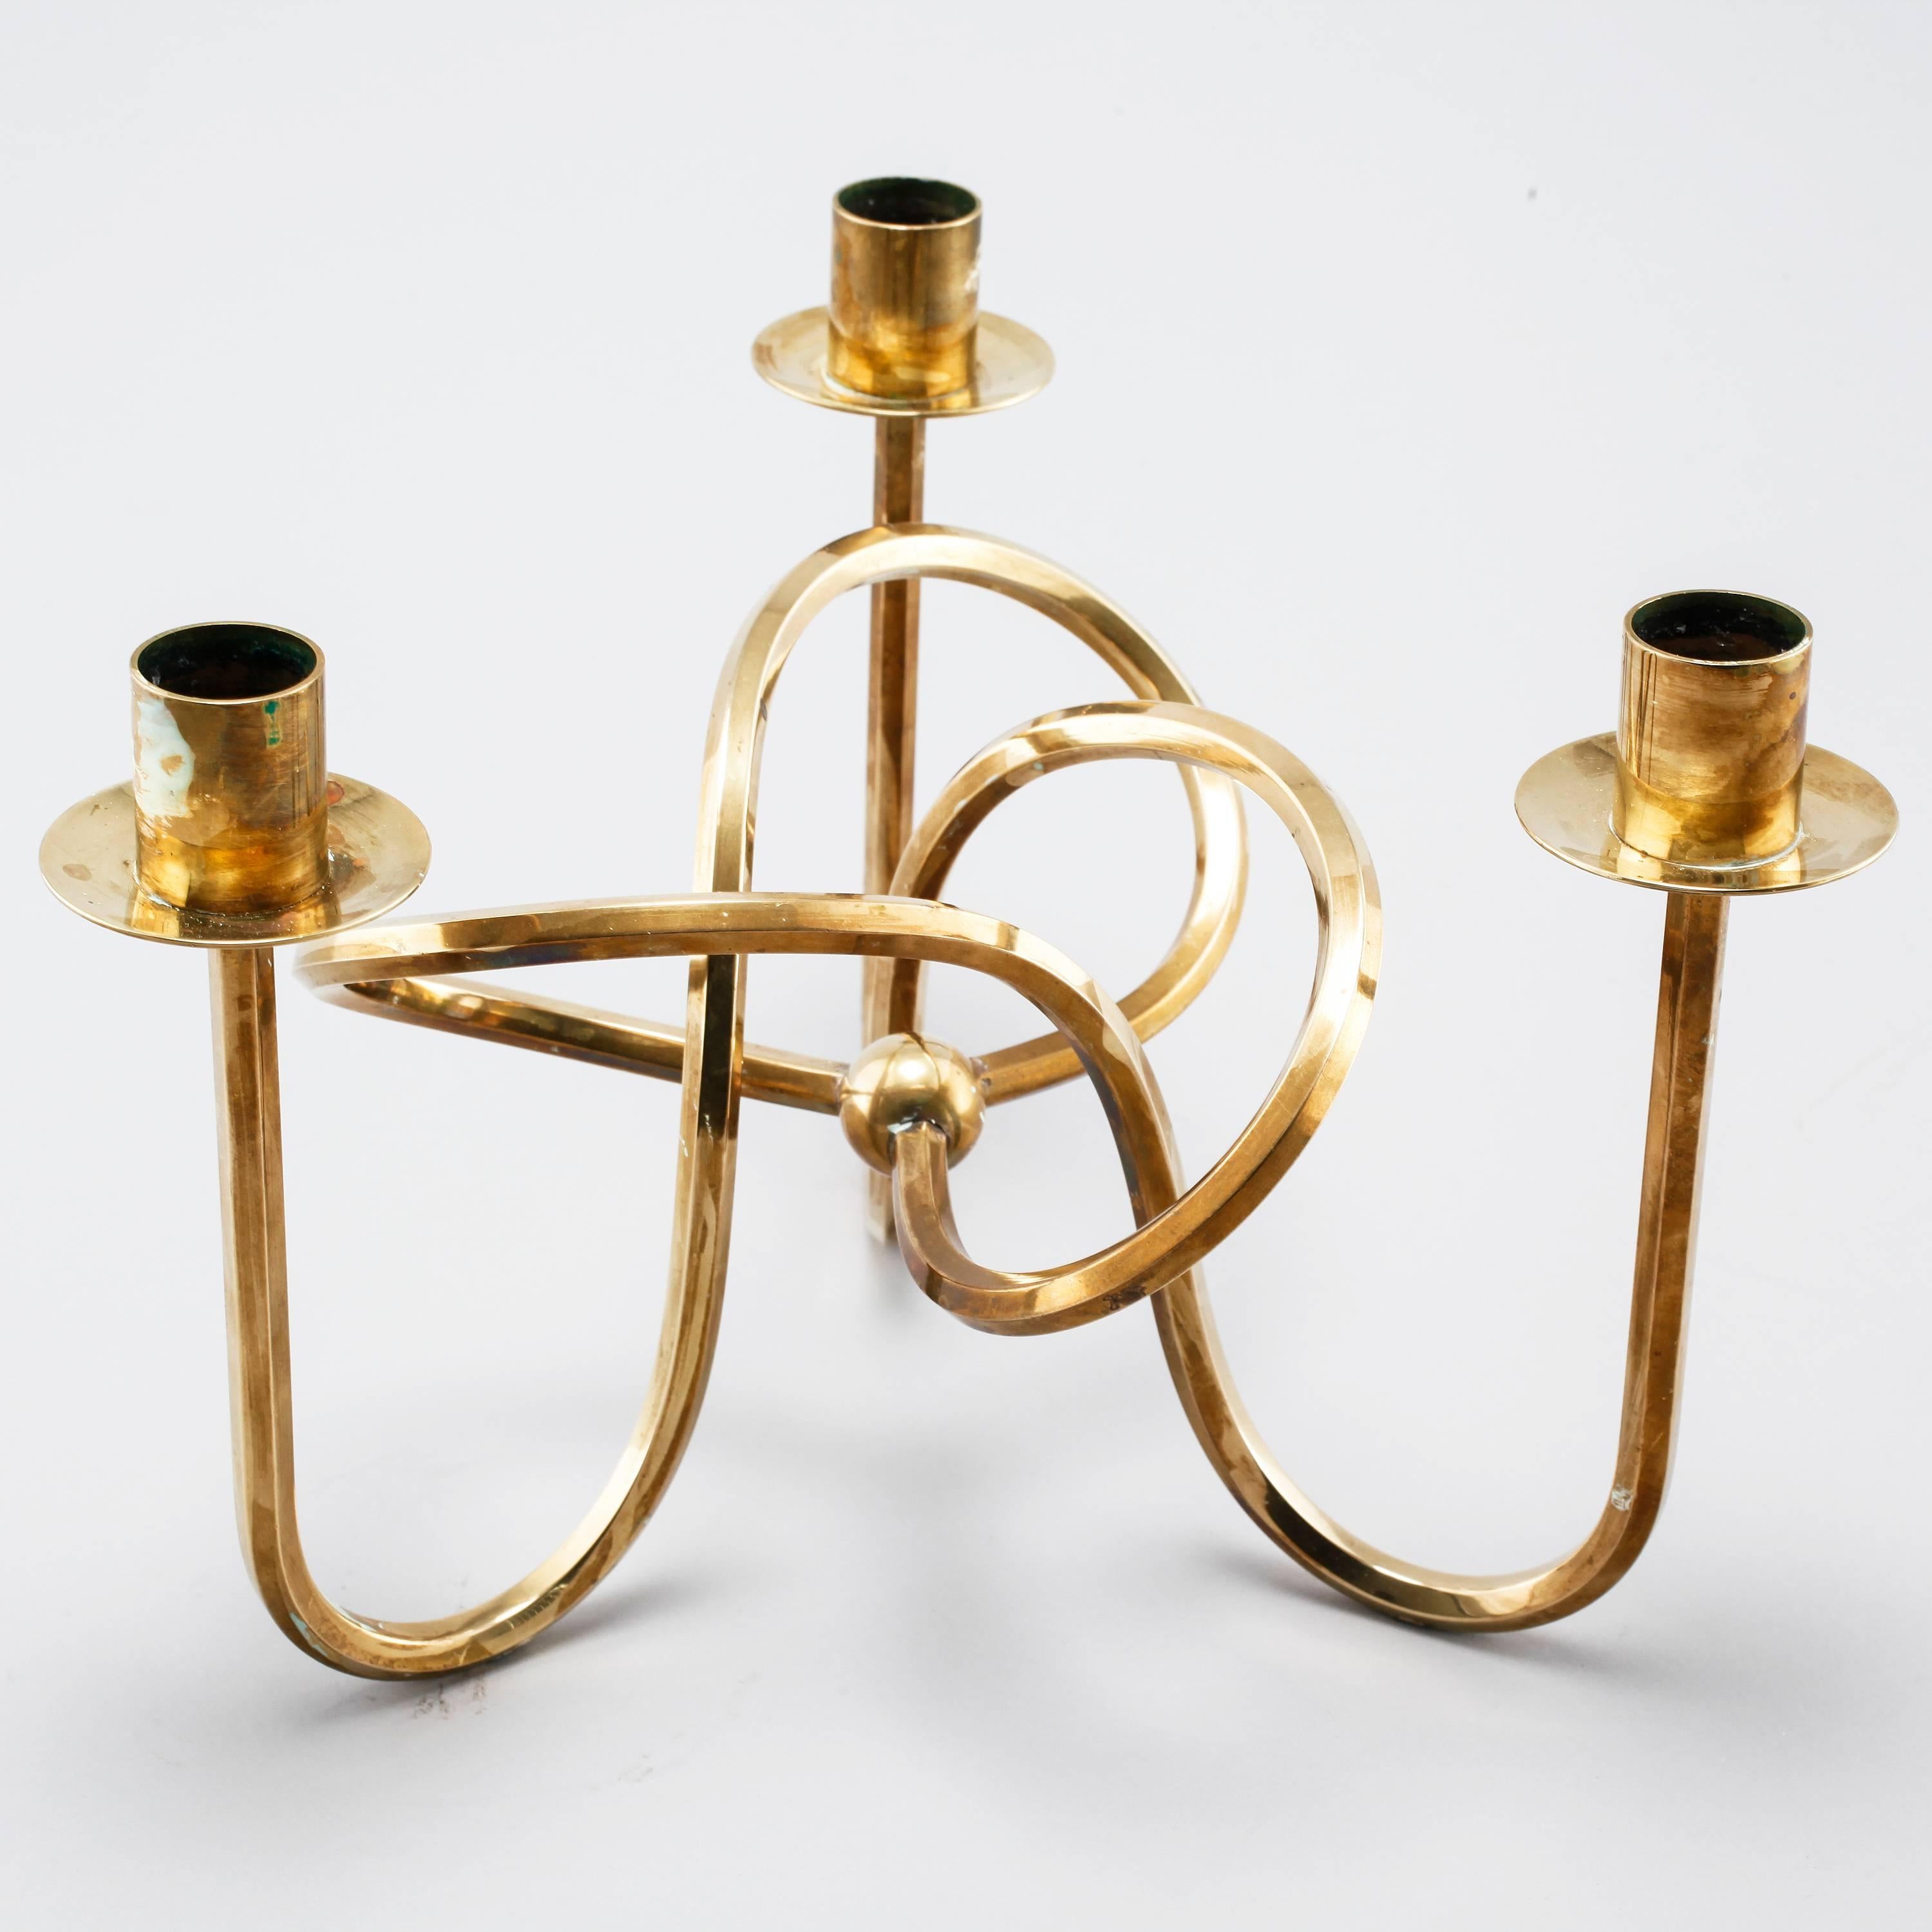 Three holder candlestick made in solid brass designed by Josef Frank and manufactured by Svenskt Tenn in Sweden.